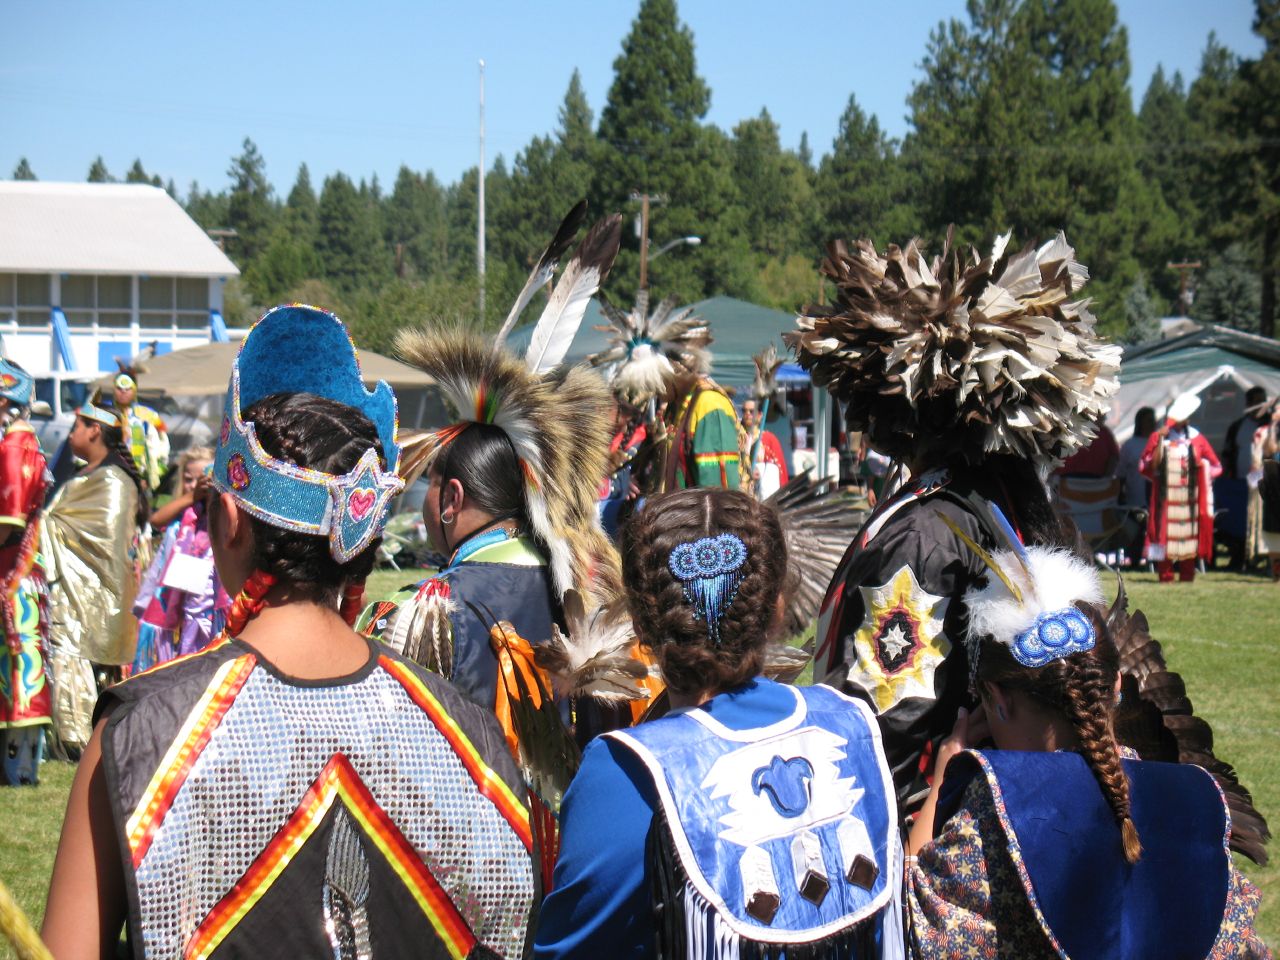 Senate Committee on Indian Affairs advances bill to benefit Klamath Tribes